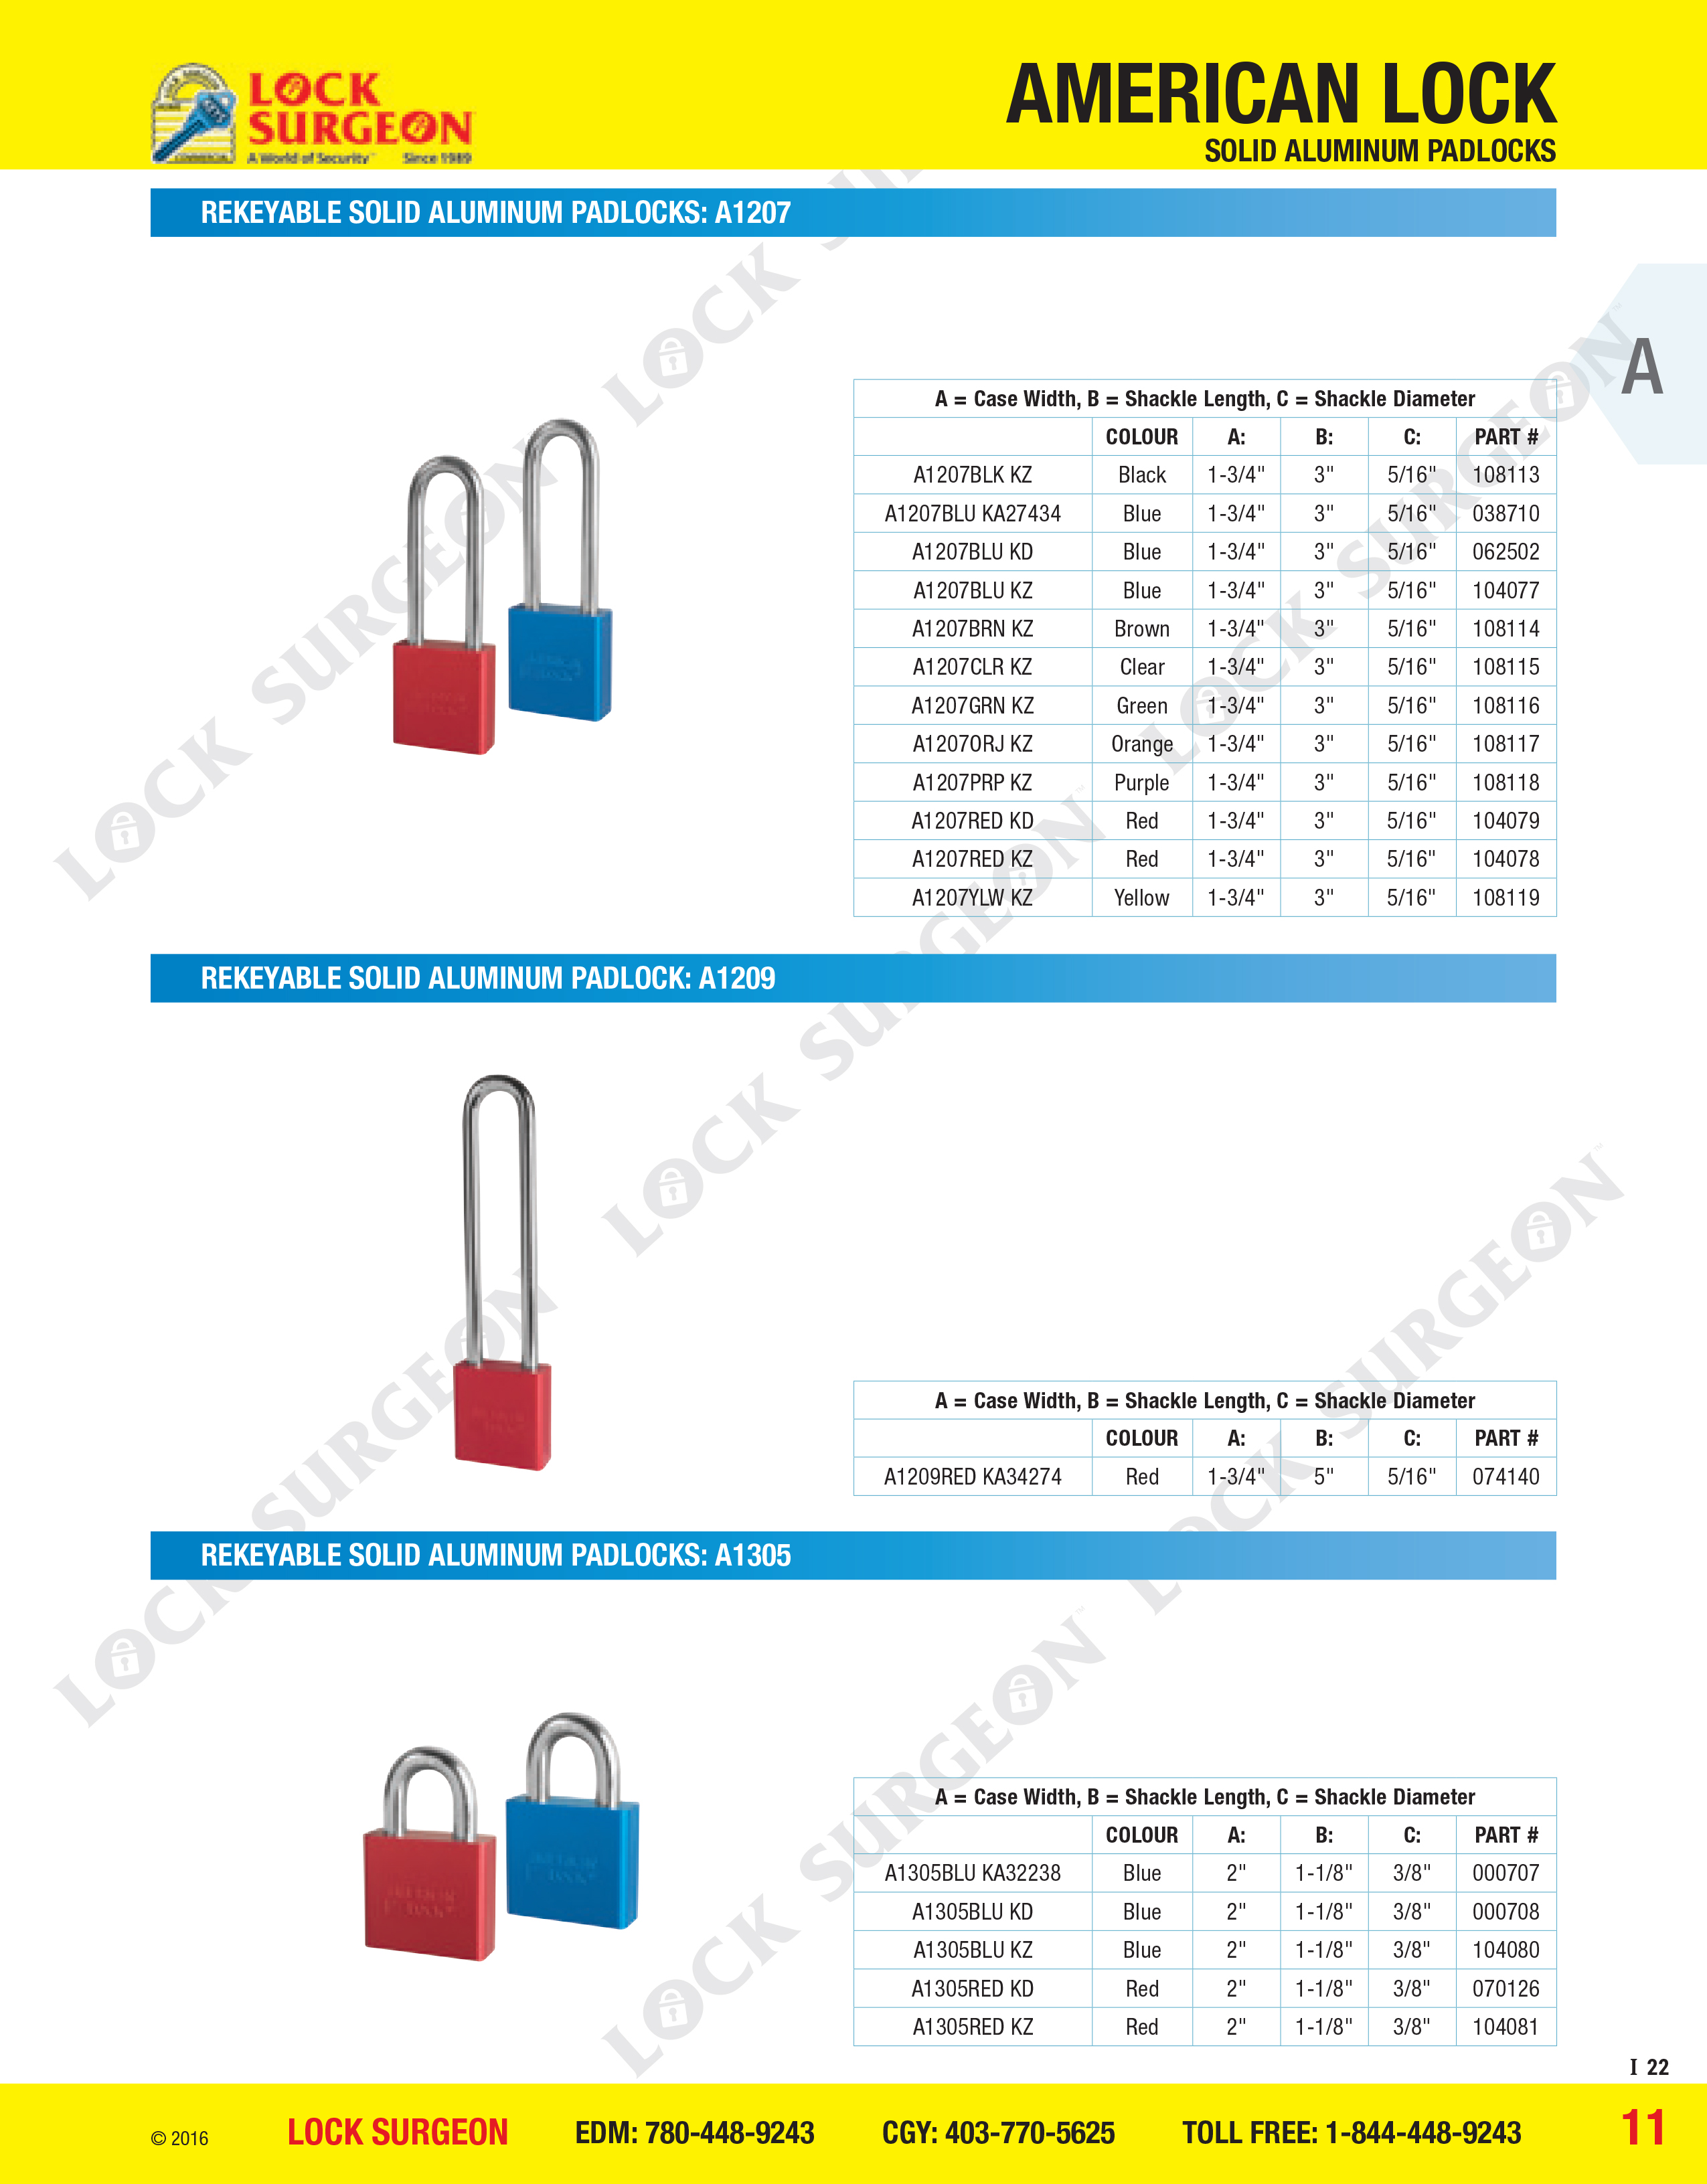 Rekeyable solid aluminium padlocks A1207, A1209 or A1305 series